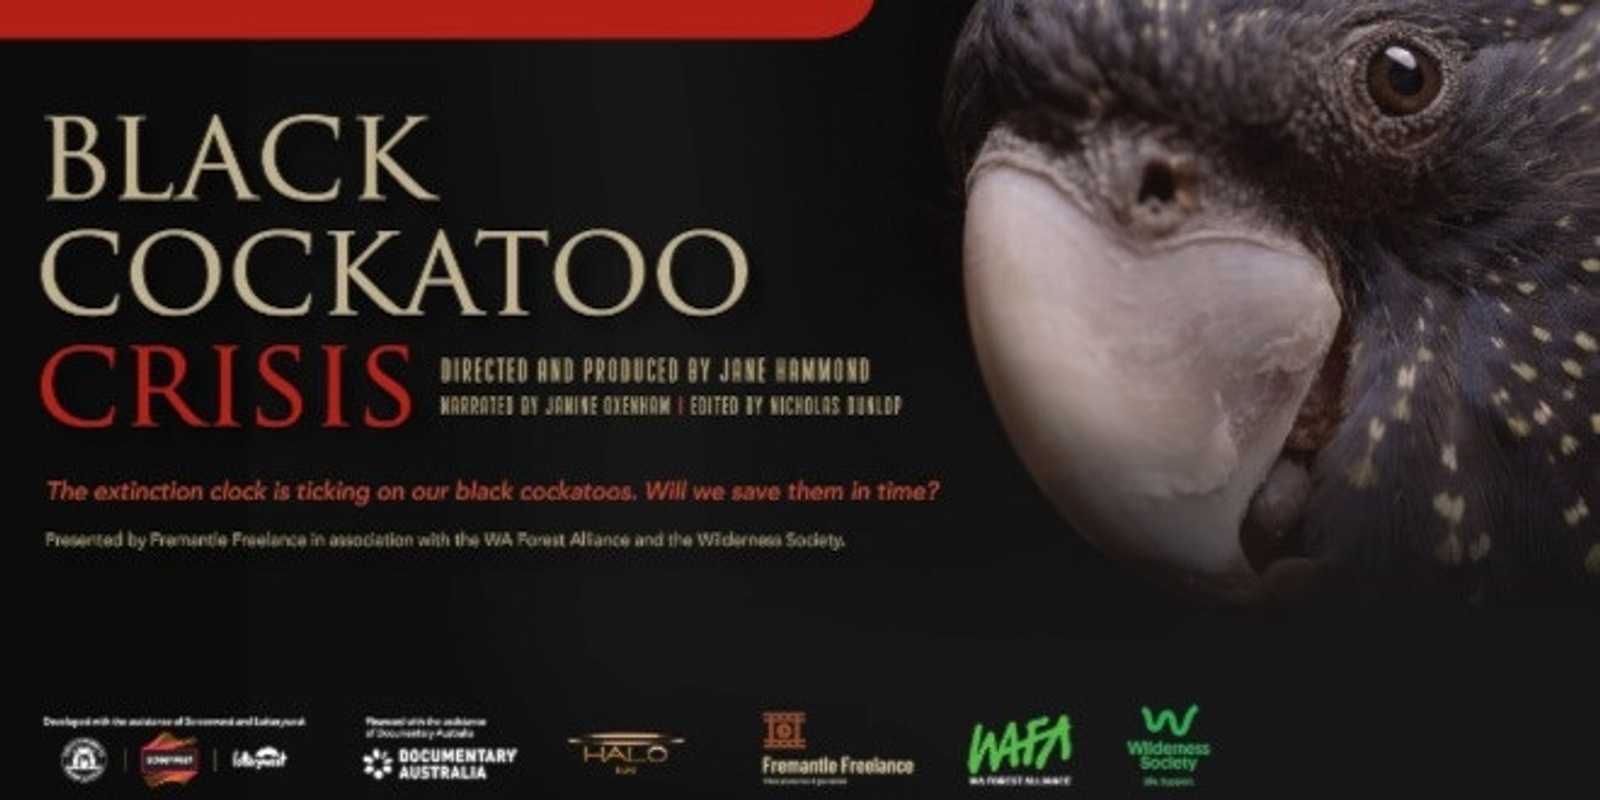 Banner image for Black Cockatoo Crisis film & Big Carnabys sculpture fundraiser